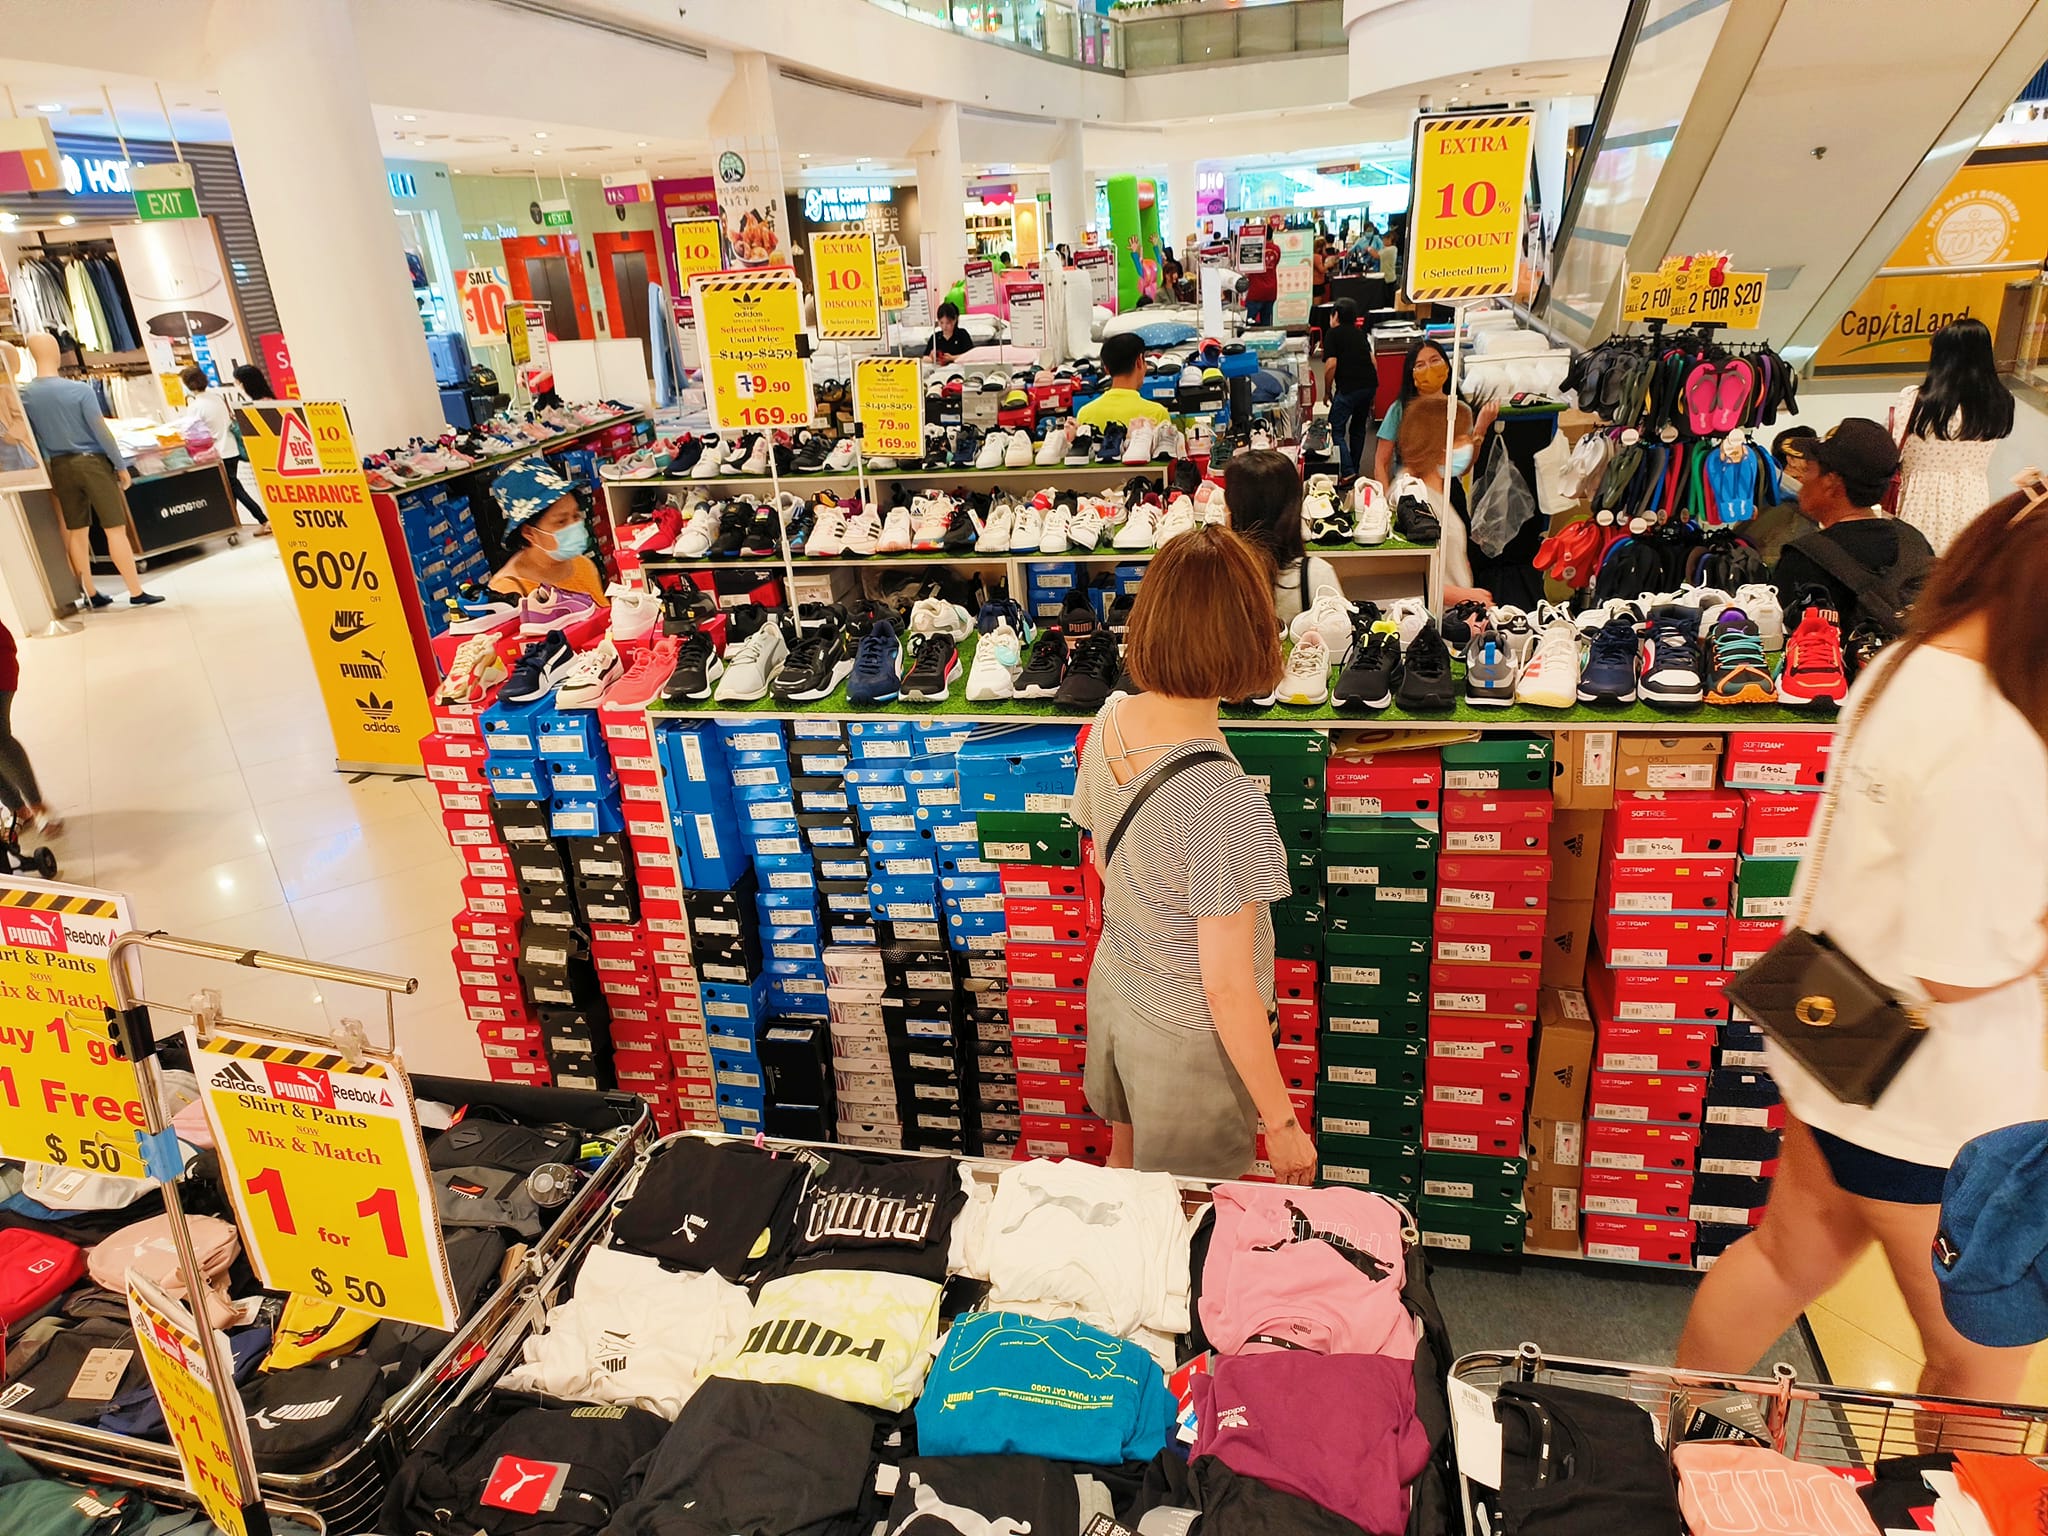 Lobang: Lot One's Atrium Sale Has Buy 1 Get 1 Free Sports Apparels From Adidas, Puma, Reebok & More Till 26 Mar 23 - 13